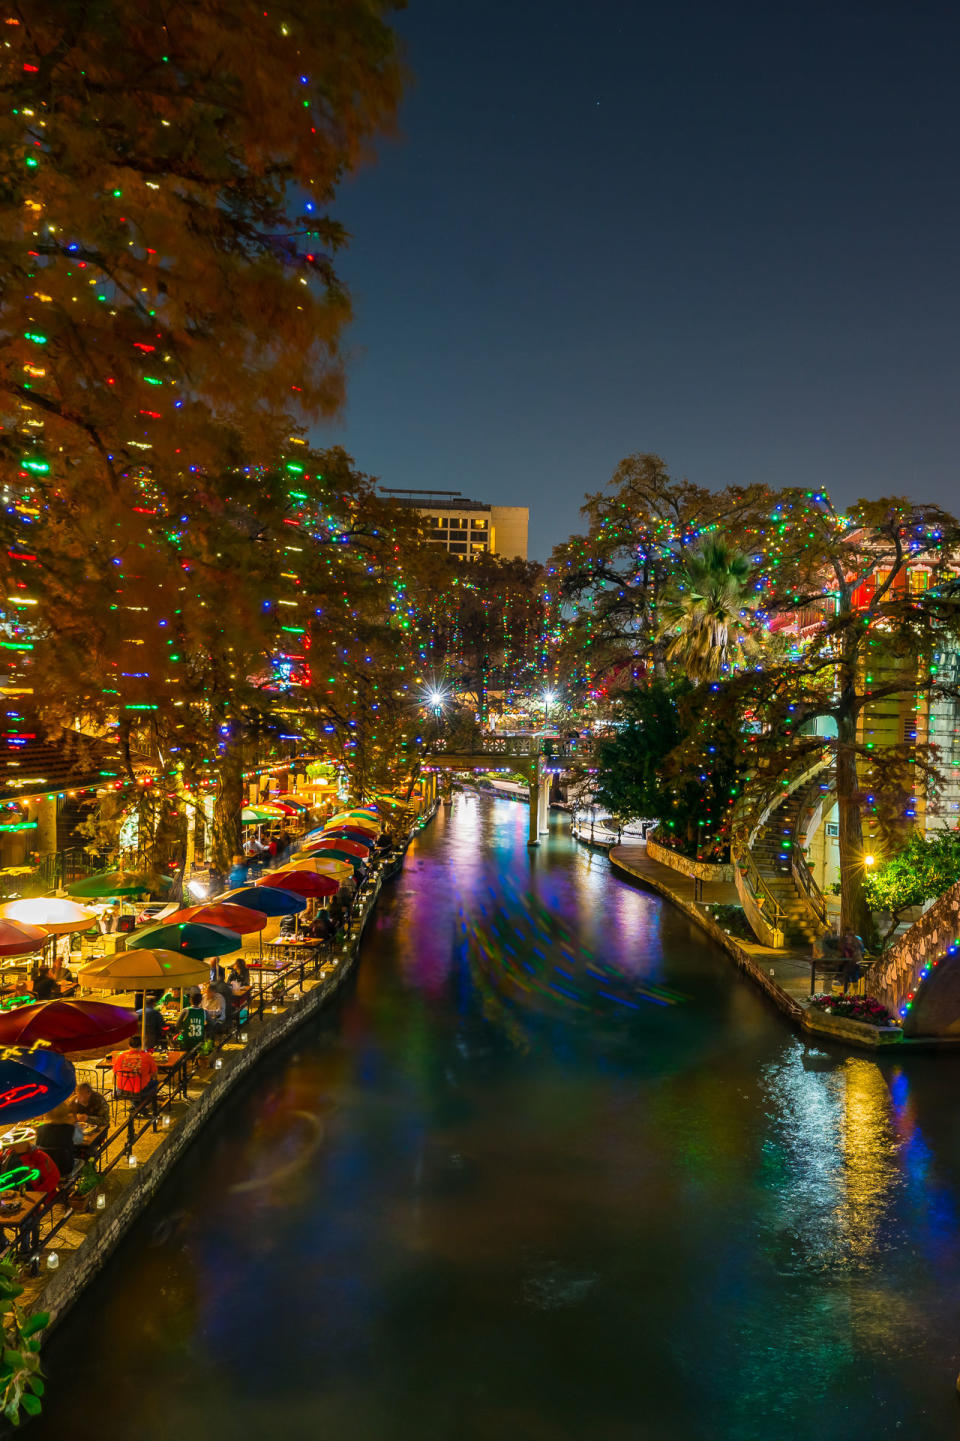 Holiday Lights on the River Walk in San Antonio, Texas